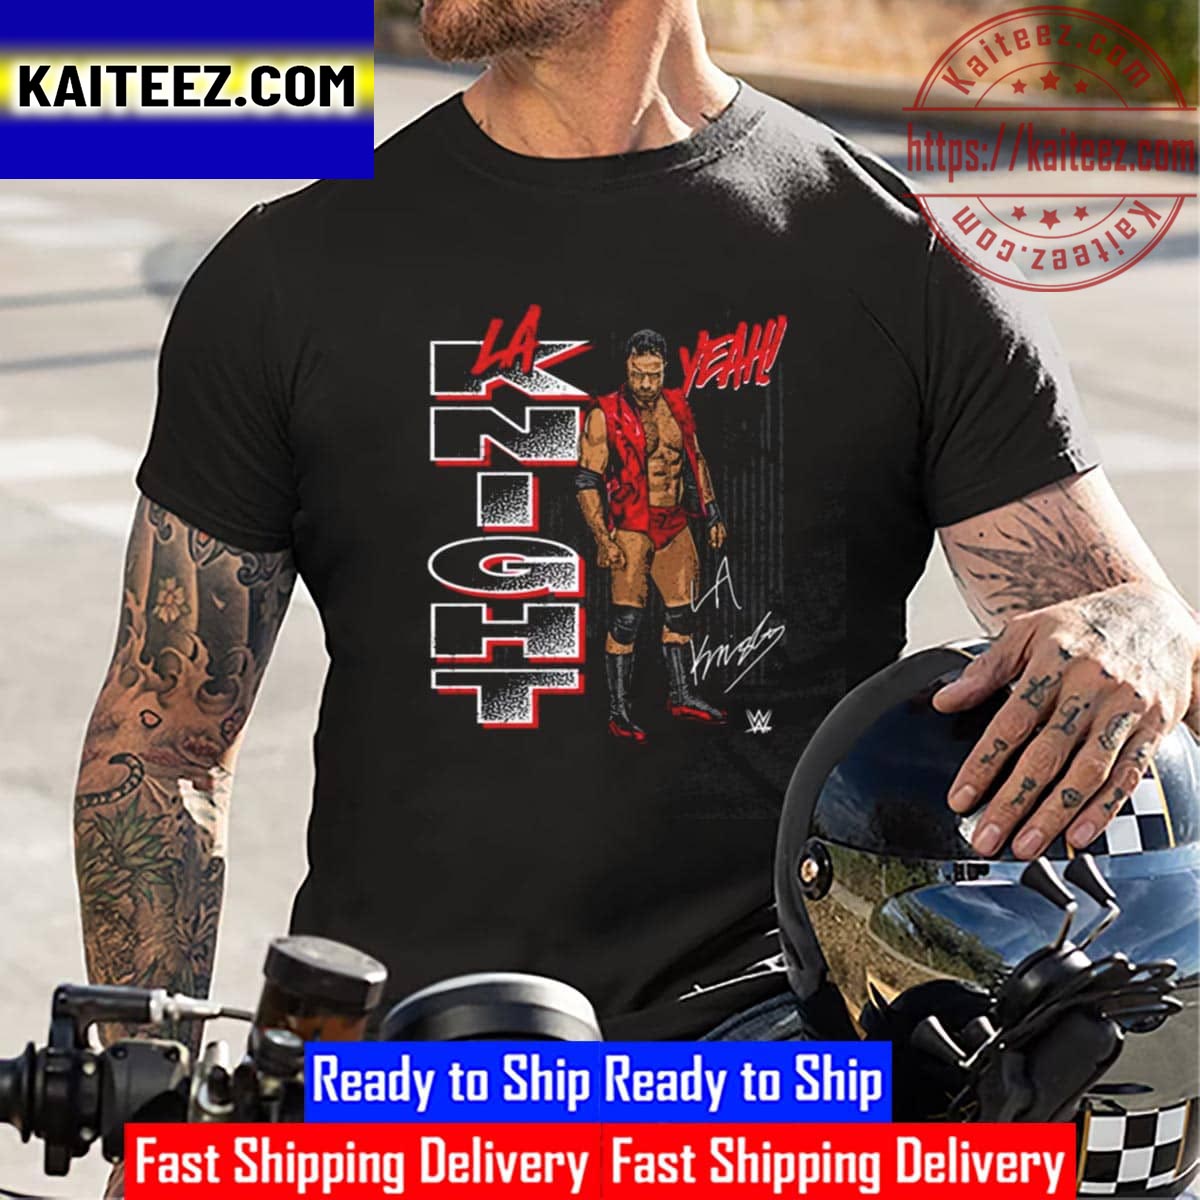 WWE LA Knight 2022 Authentic T-Shirt - Mens